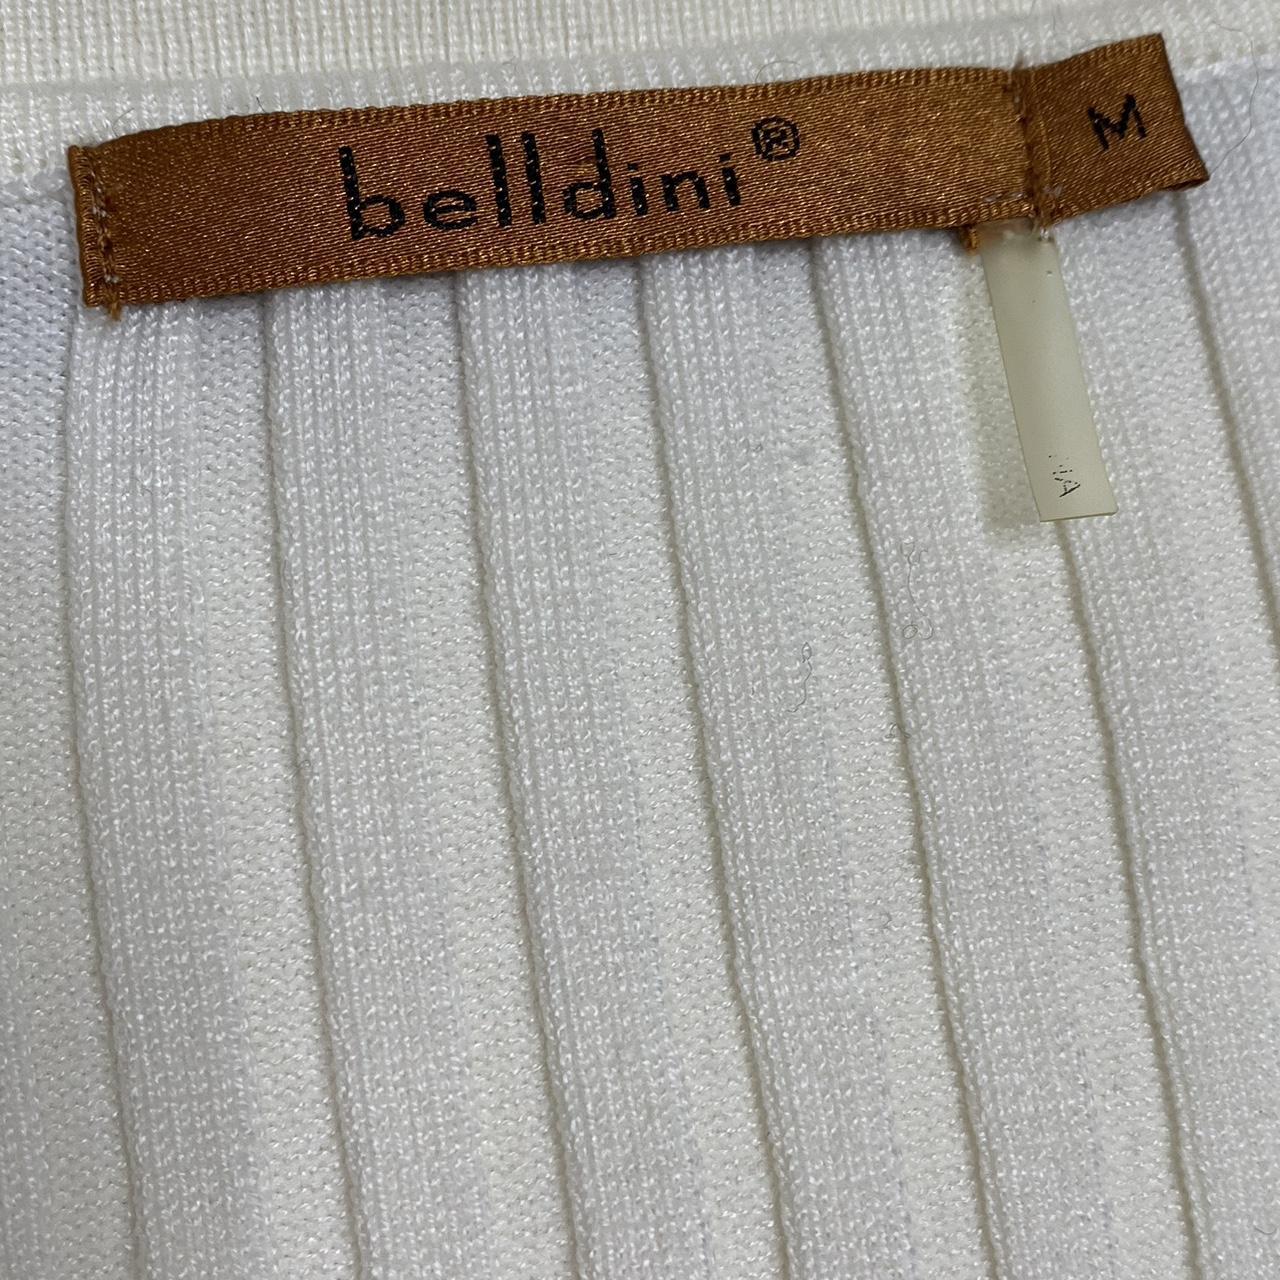 Belldini Women's White and Black Blouse (4)